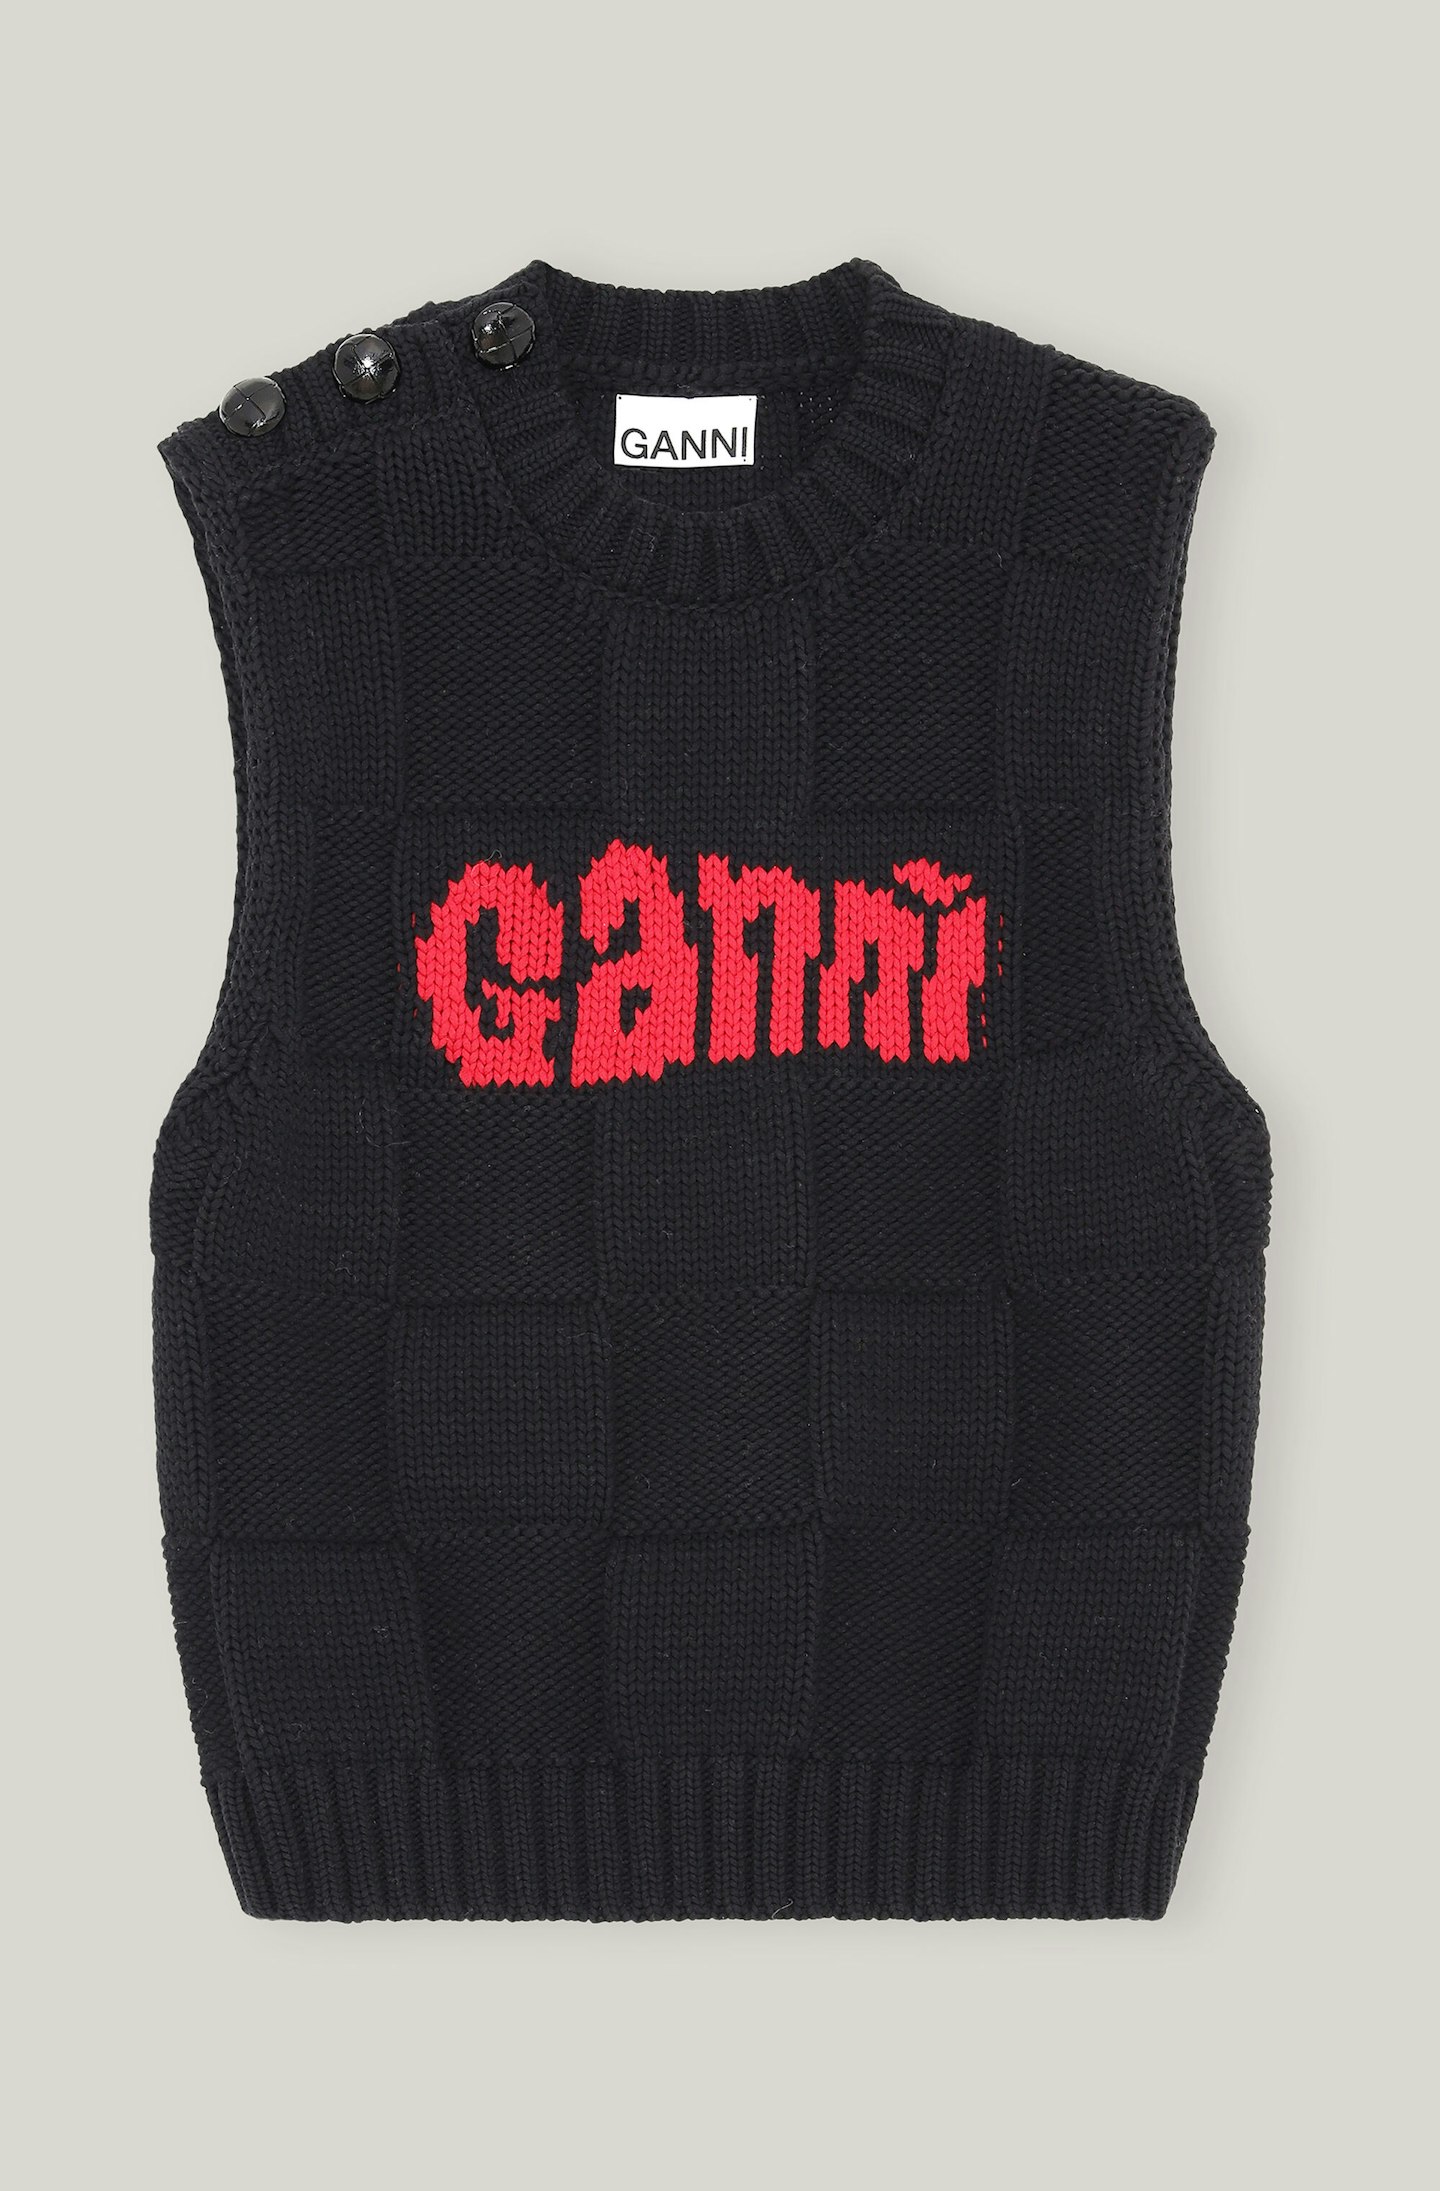 Ganni, Knitted Vest, £175